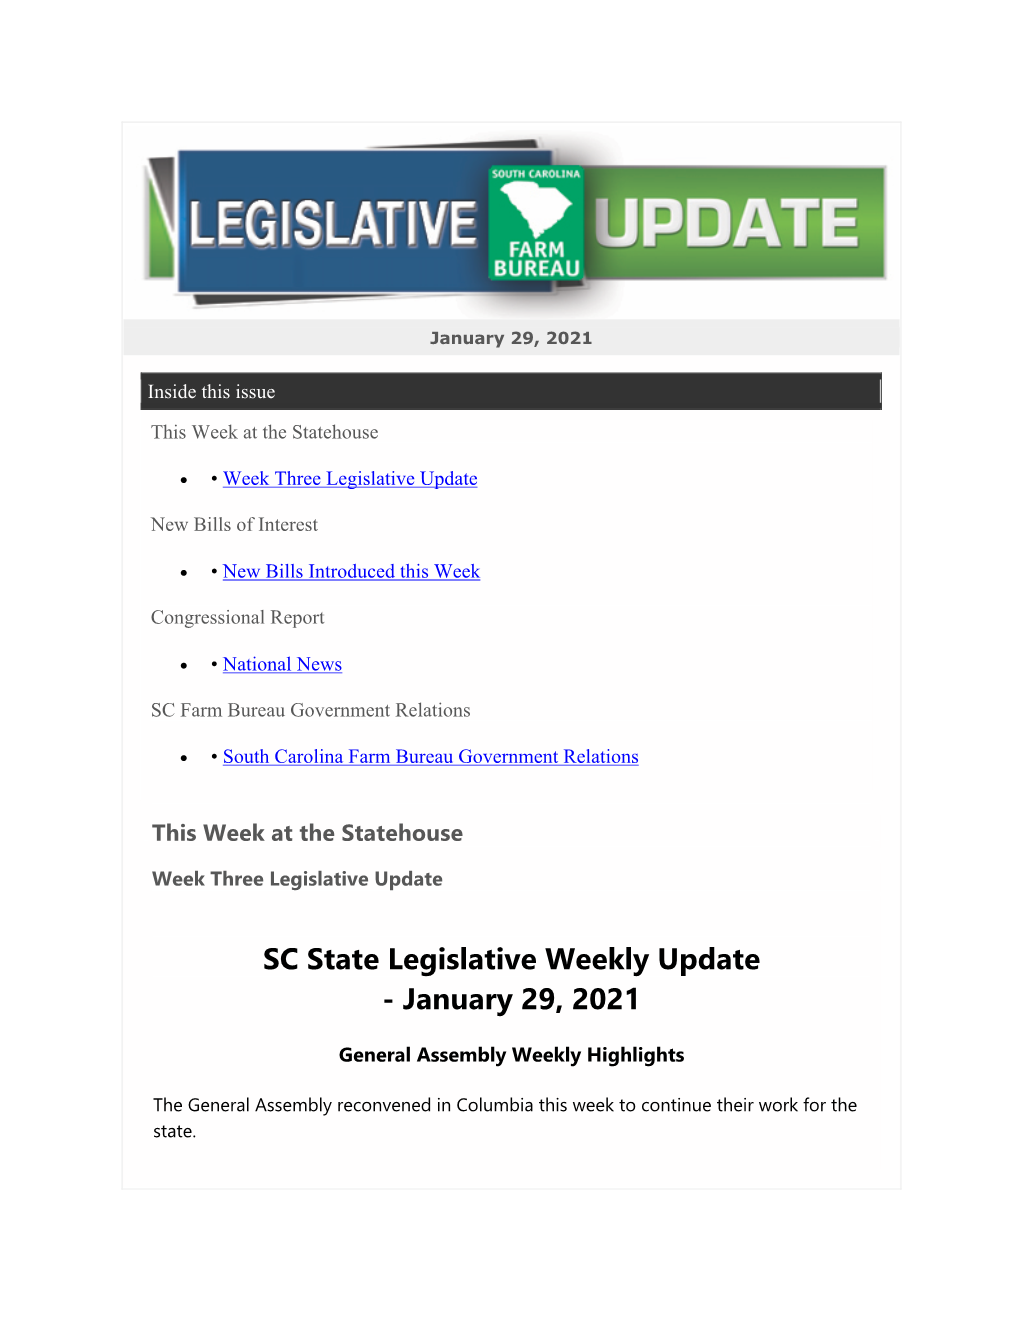 SC State Legislative Weekly Update - January 29, 2021